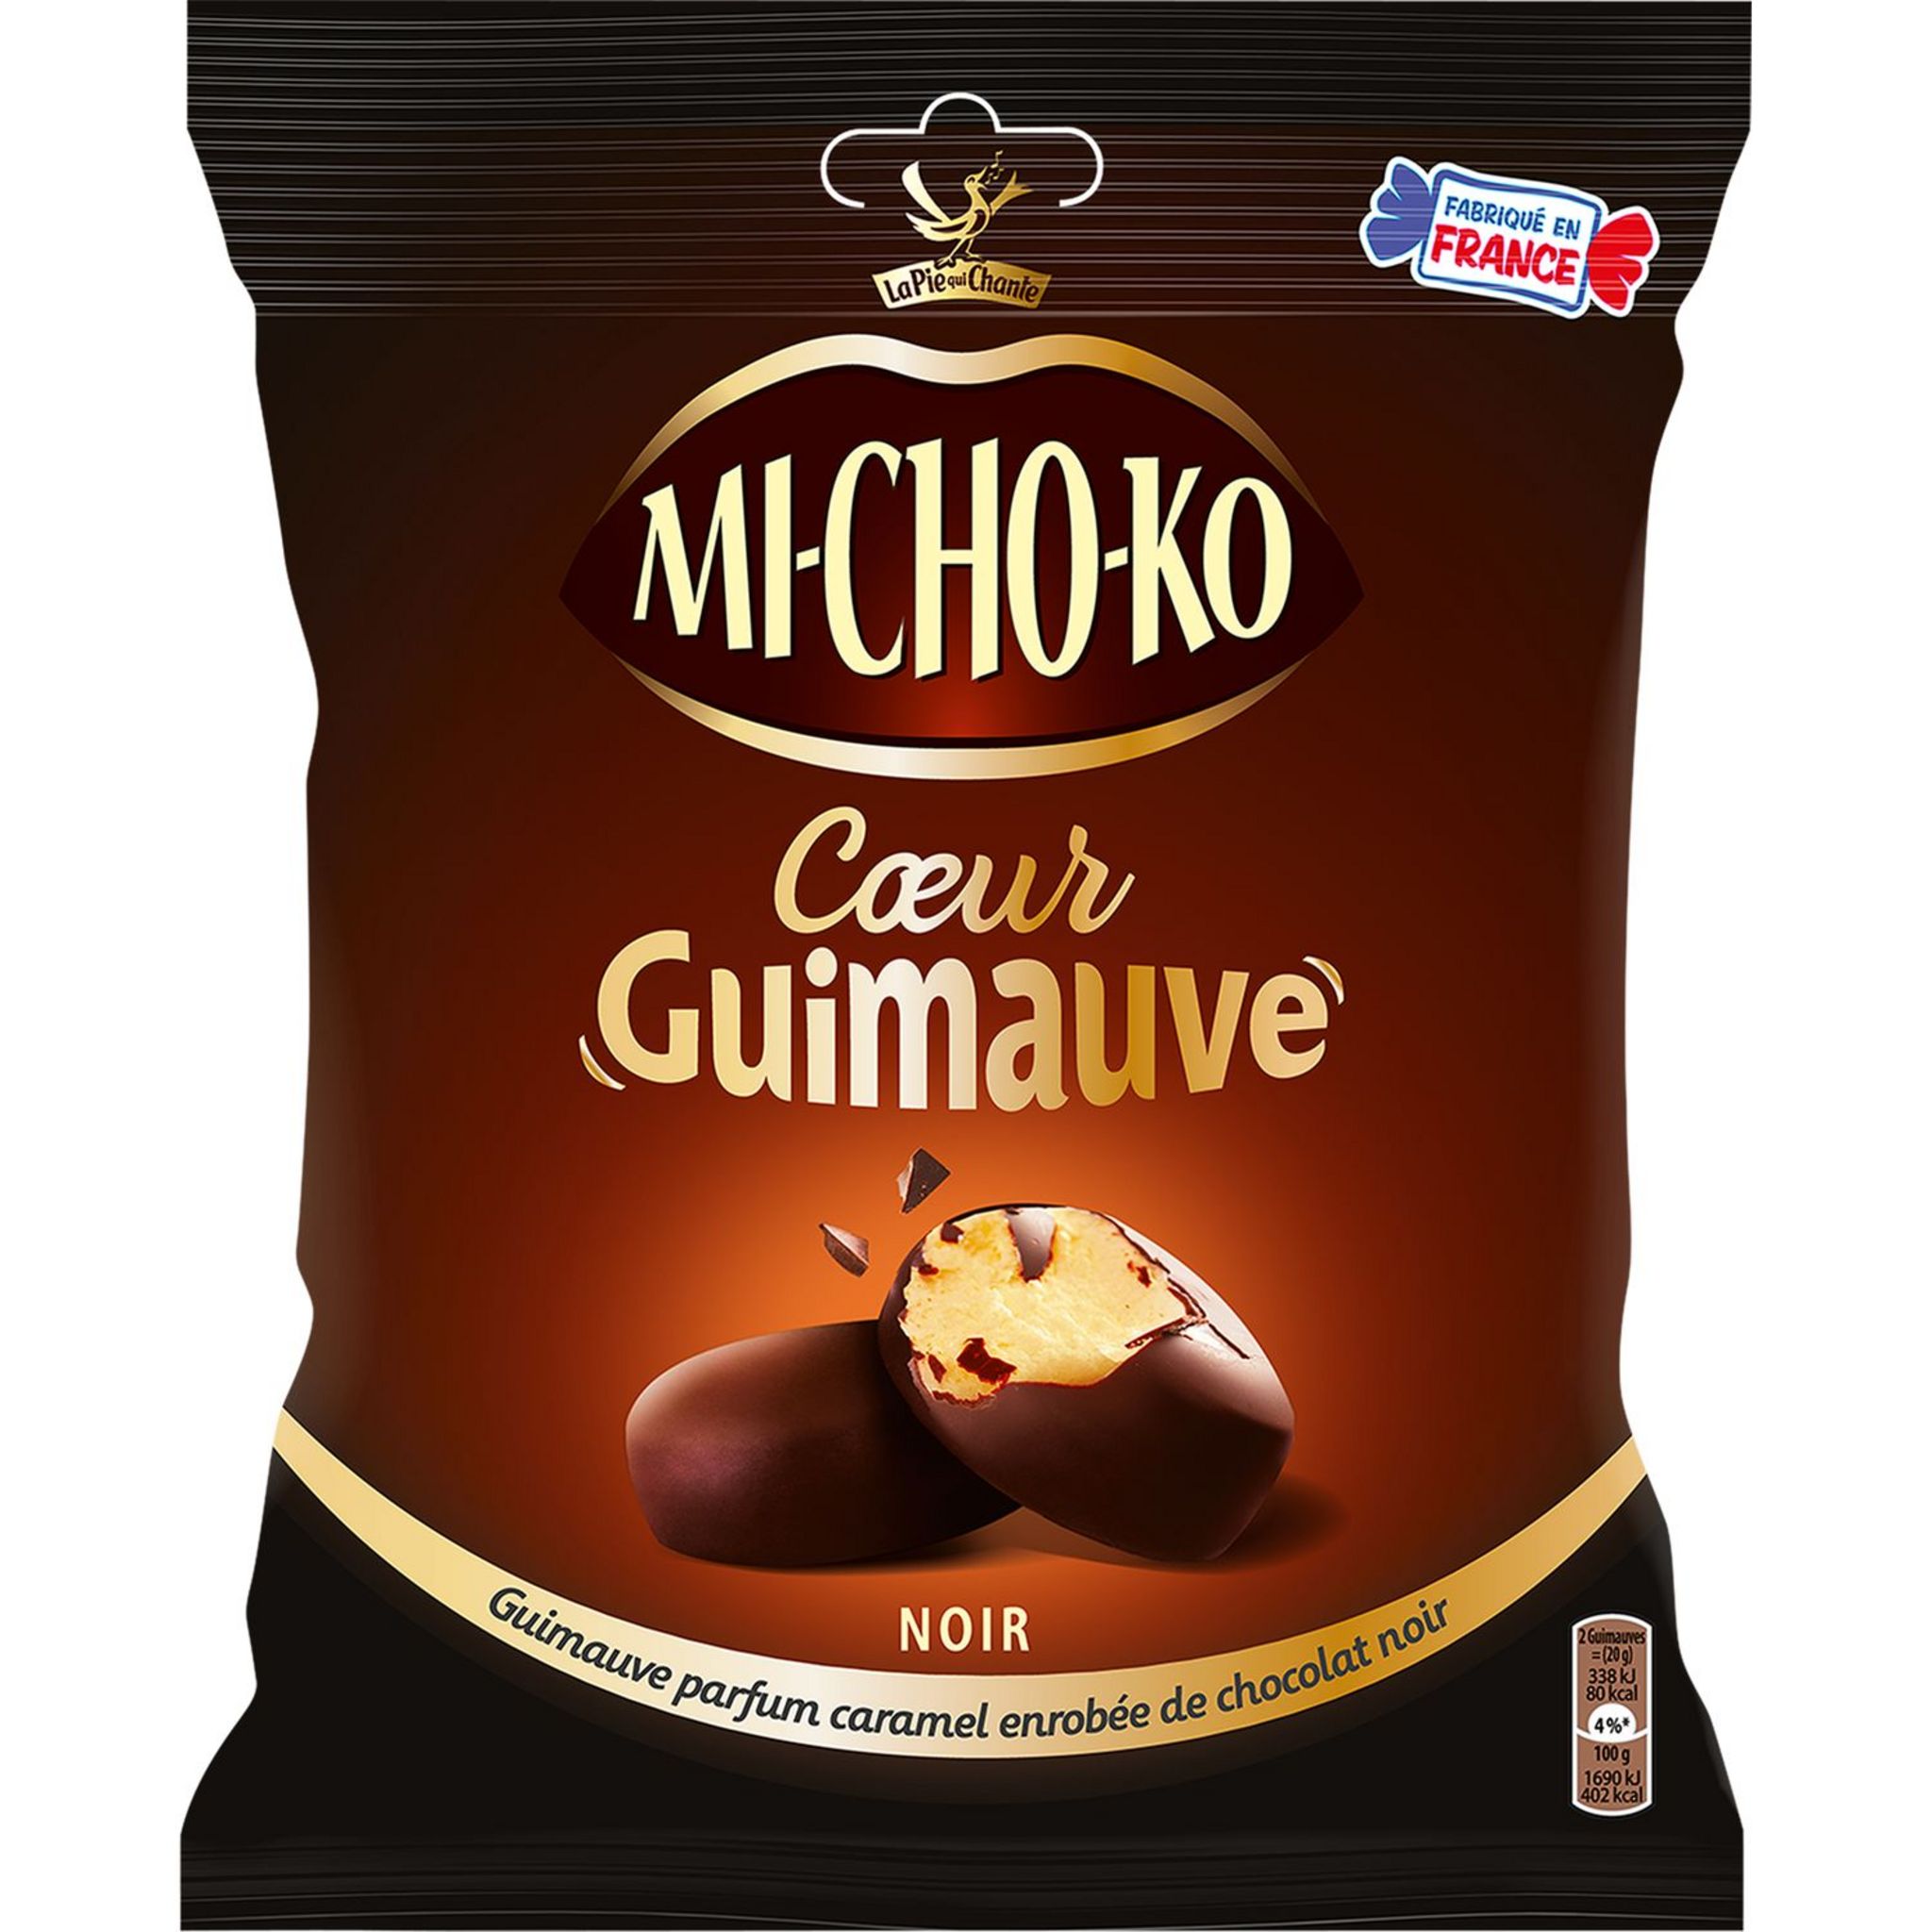 Michoko, le bonbon chocolat noir et caramel